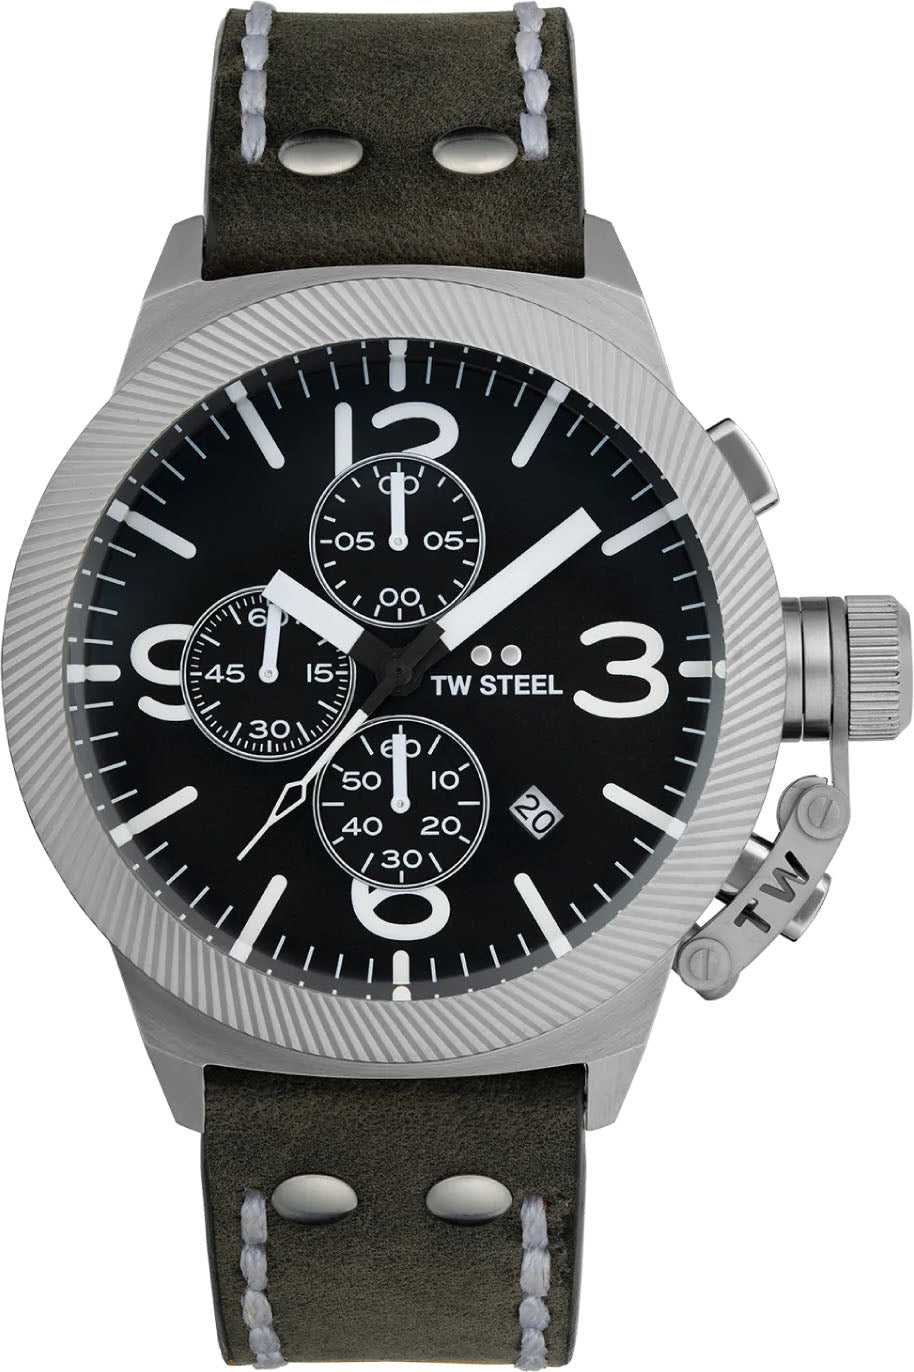 Photos - Wrist Watch TW Steel Watch Canteen - Grey TW-686 